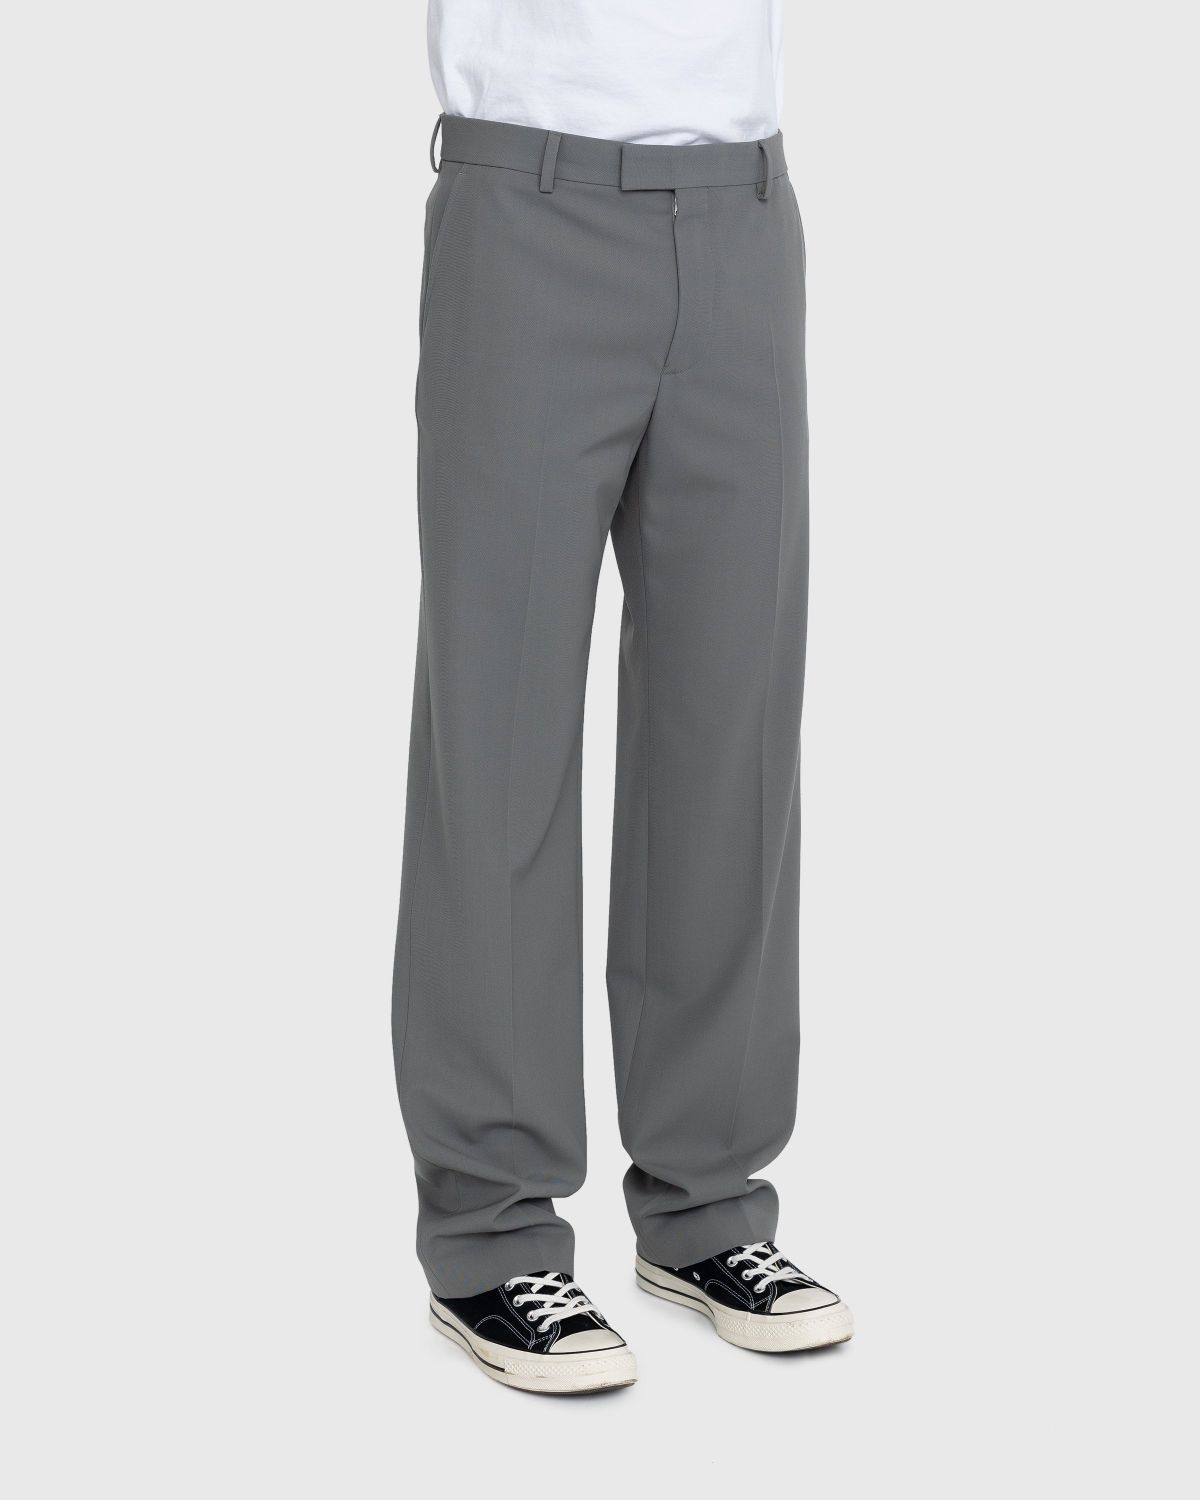 Dries van Noten – Pinnet Long Pants Grey - Trousers - Grey - Image 3